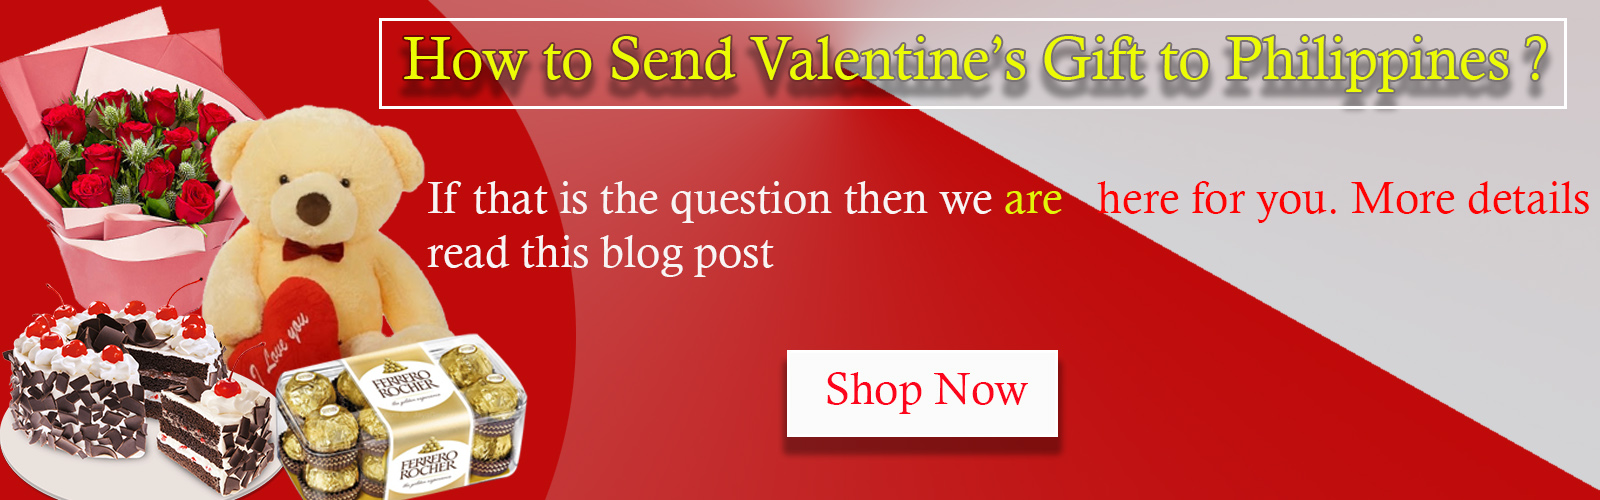 send valentines gift to philippines